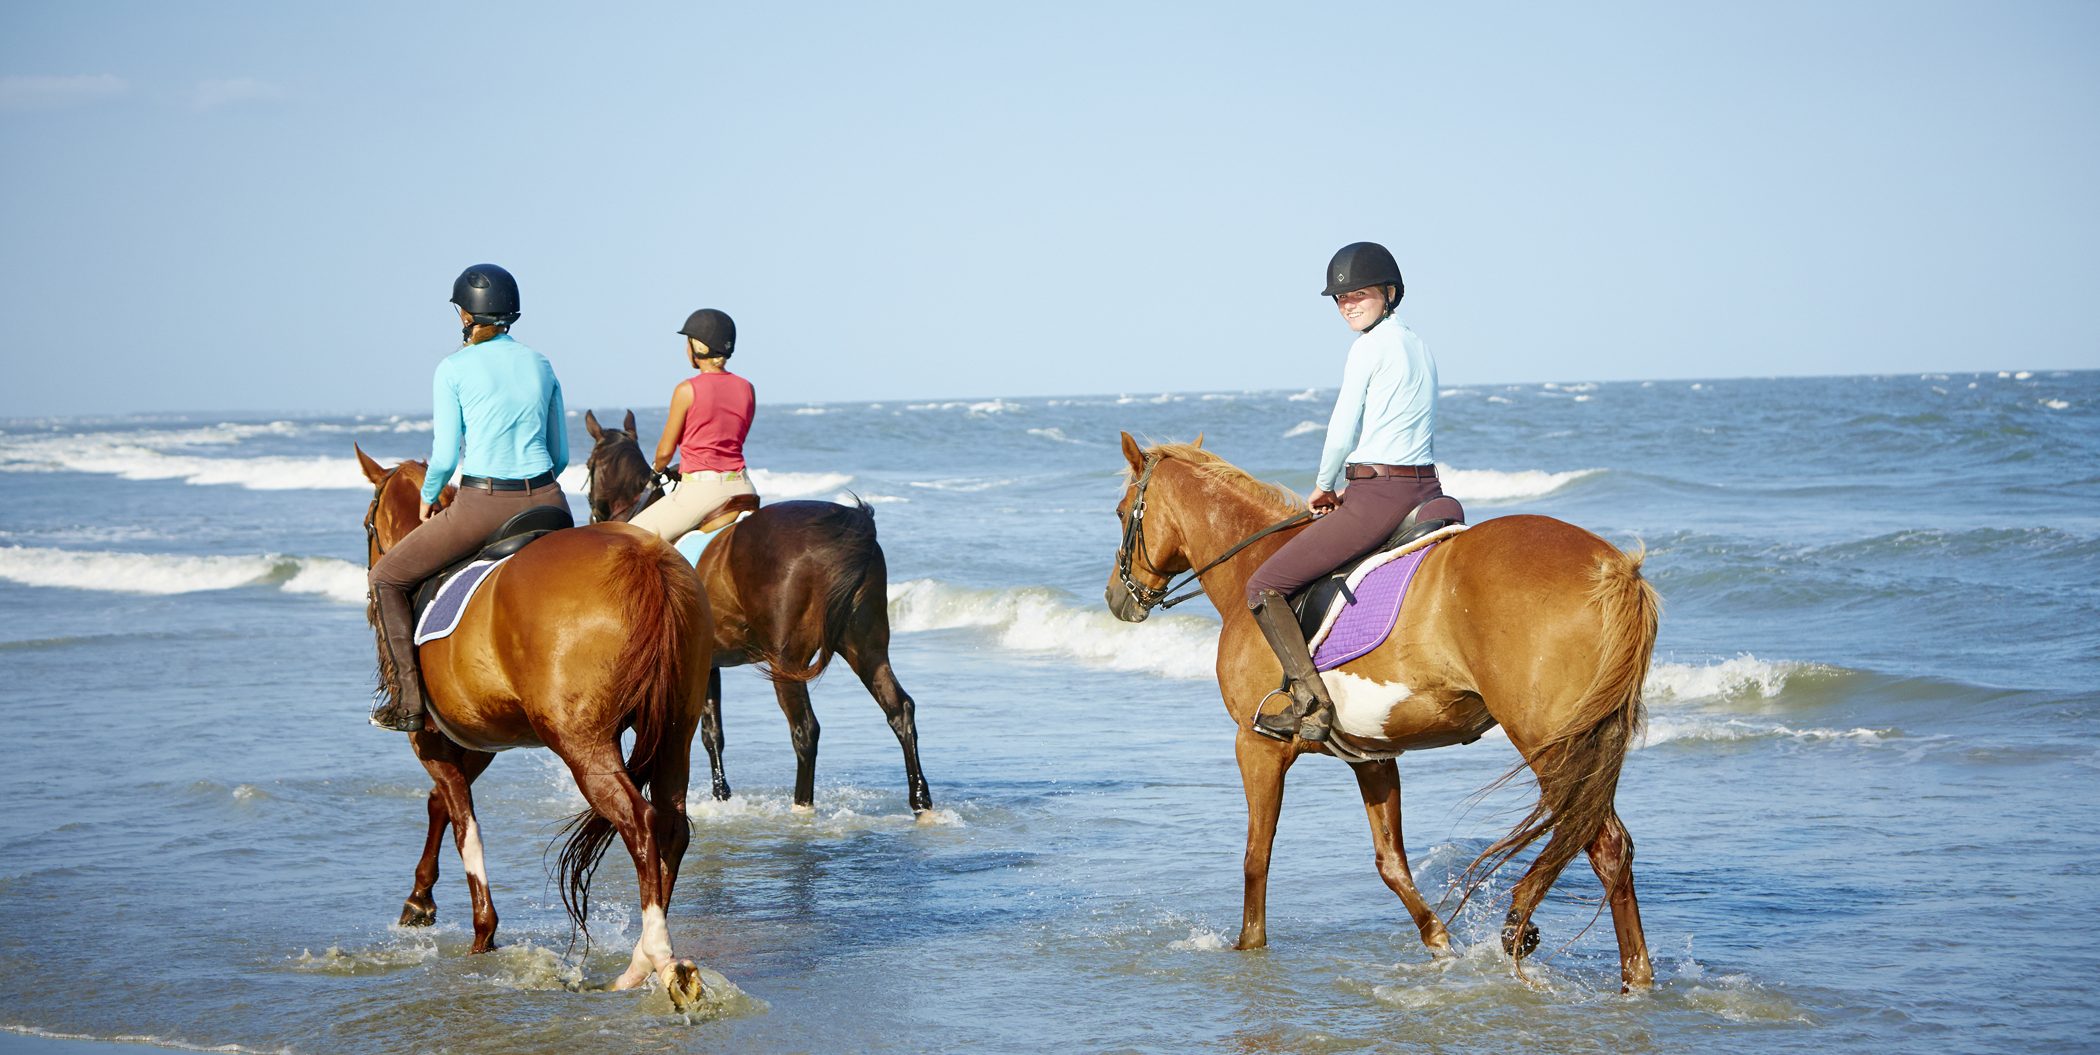 women riding horses in the ocean